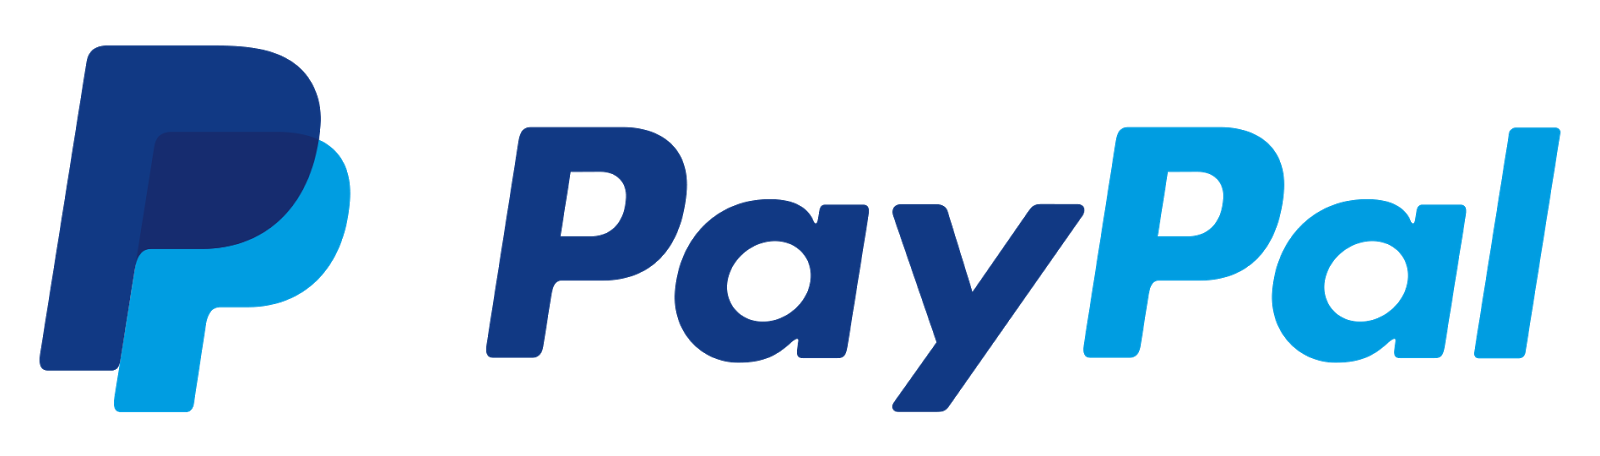 Paypal-Logo-Transparent-png-format-large